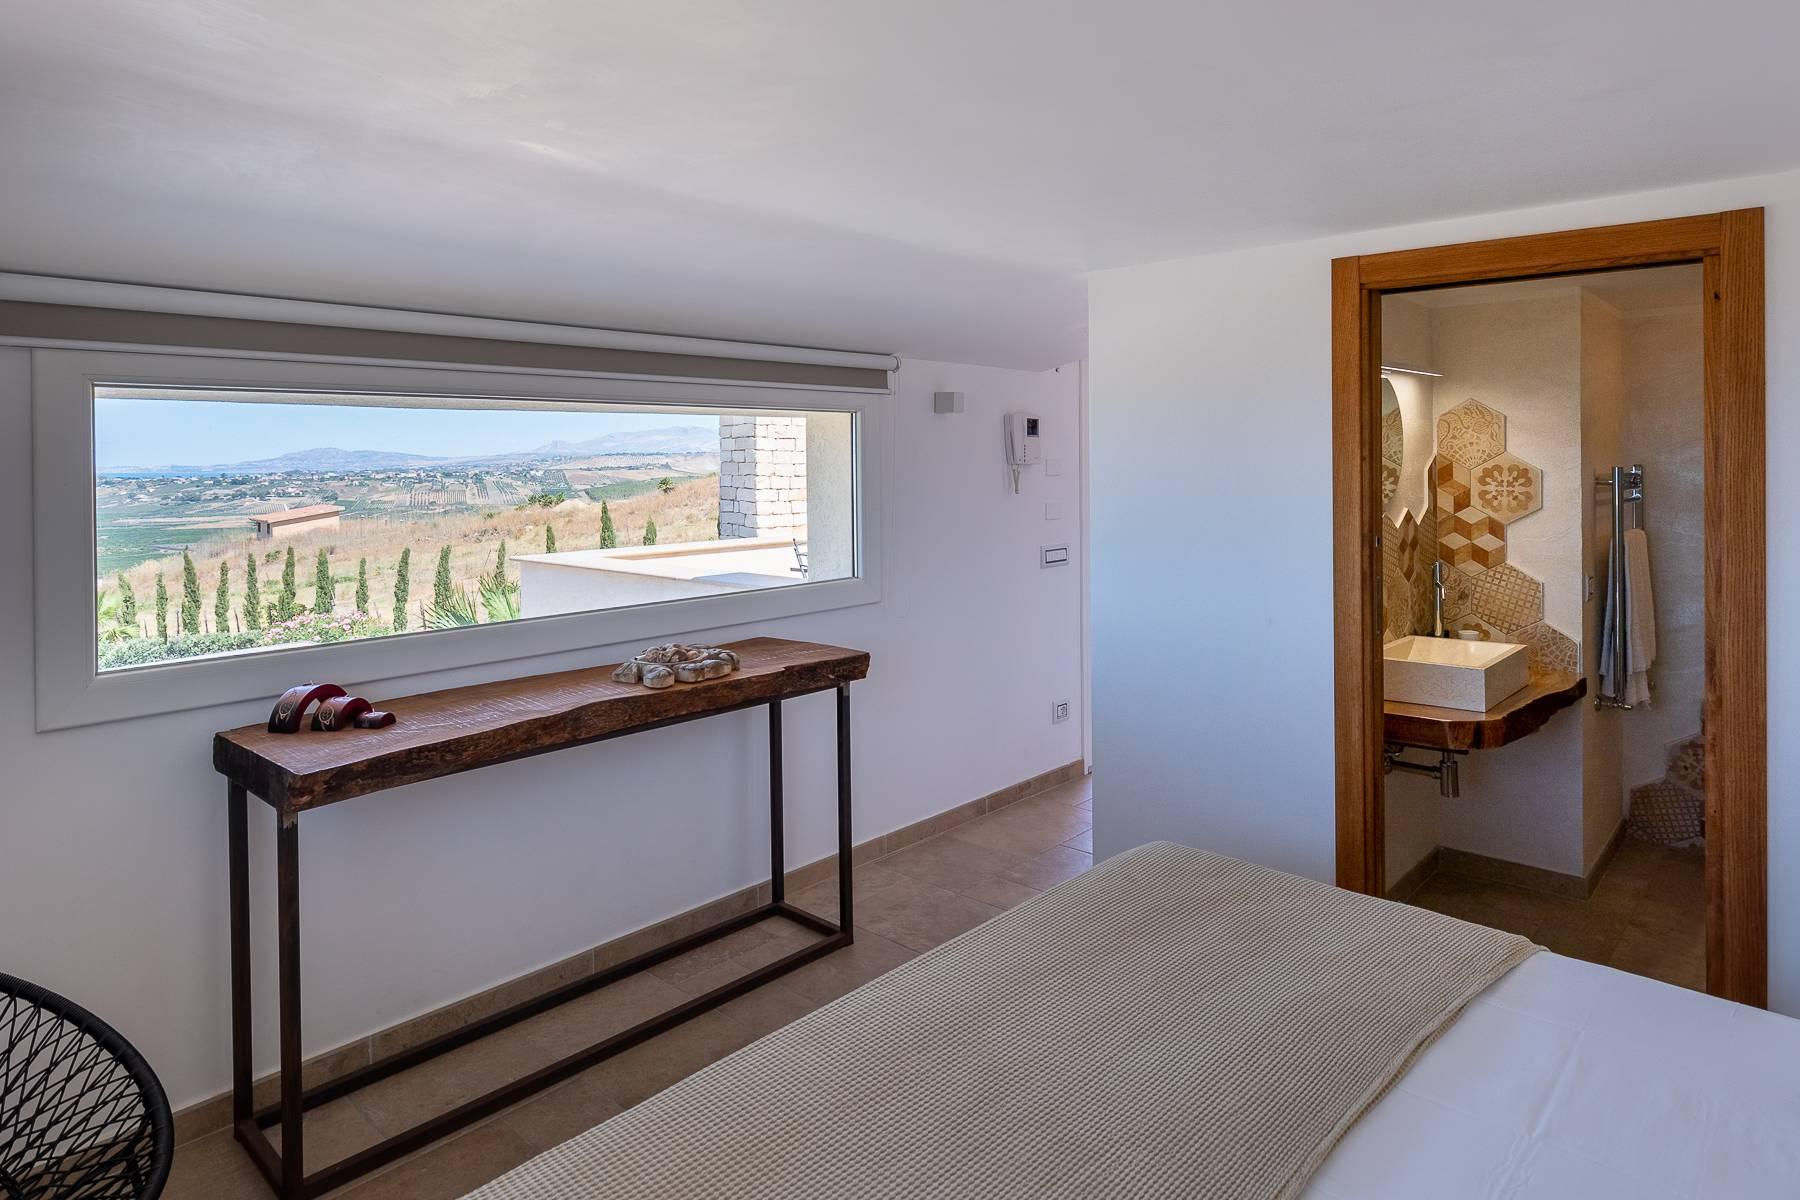 Exclusive villa with stunning views on the Mediterranean sea - 31